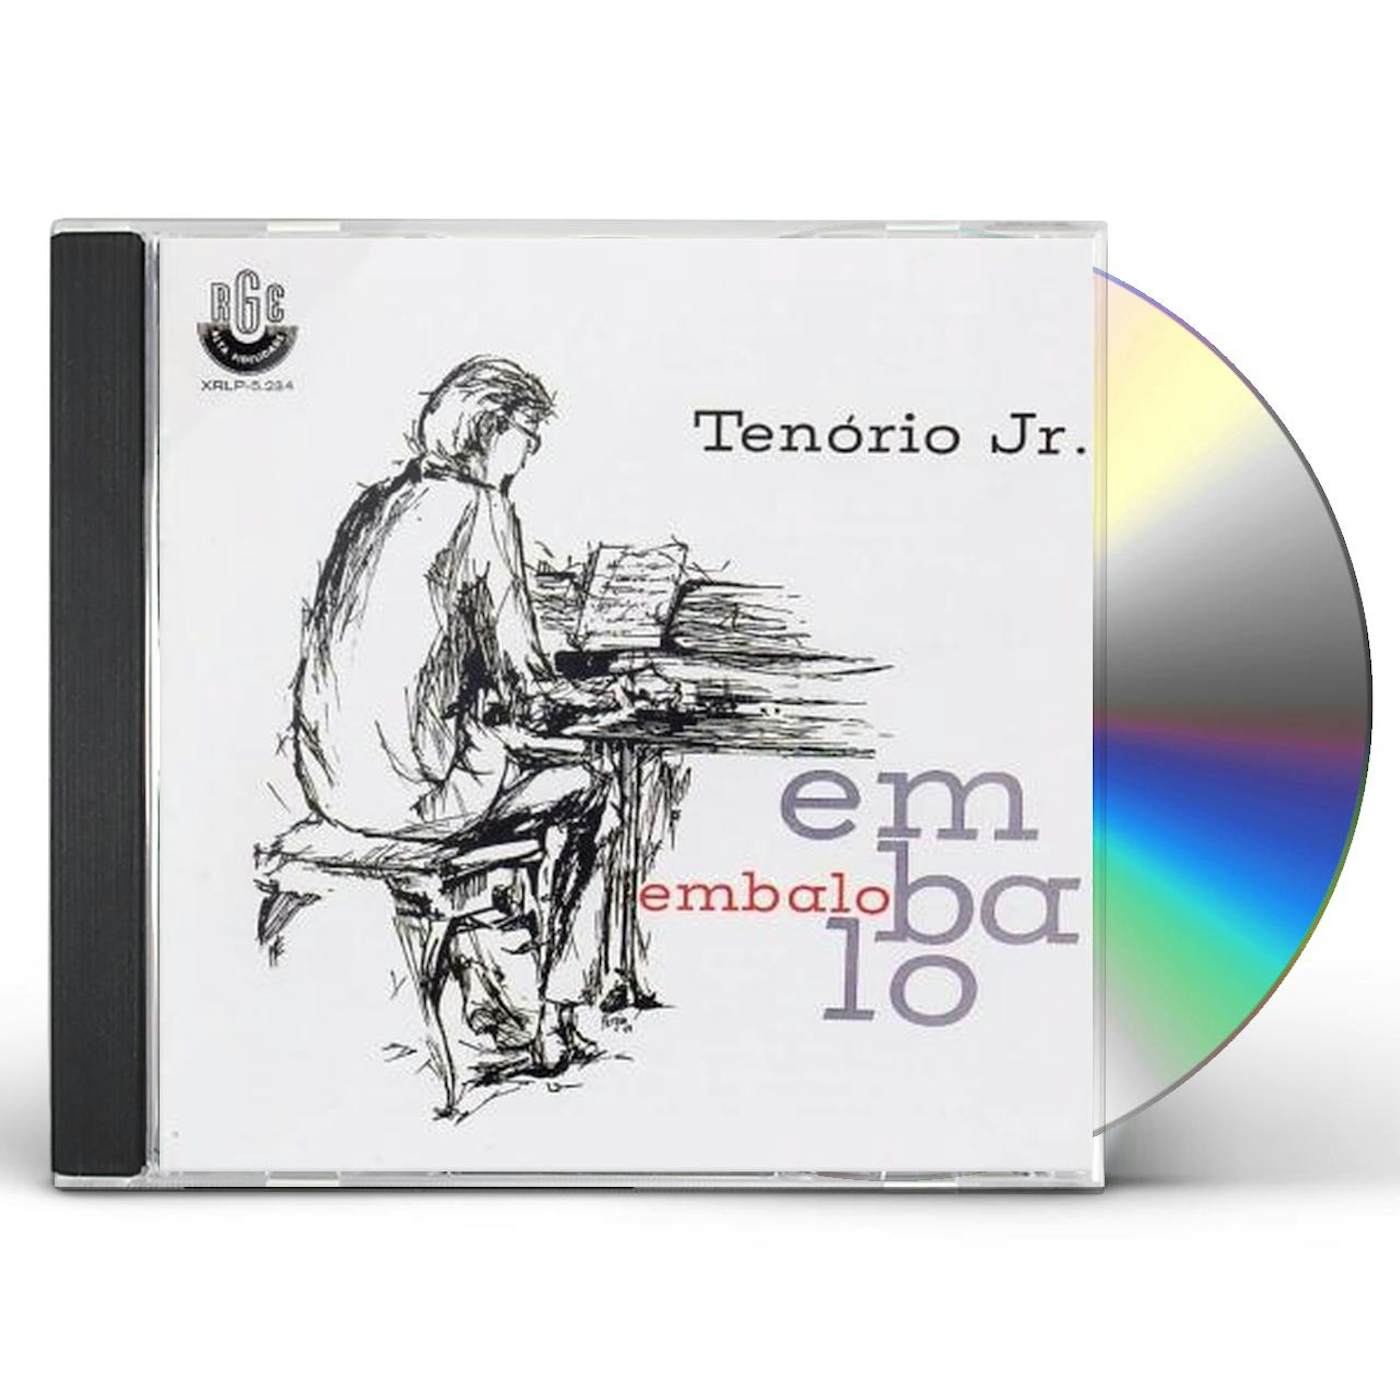 Tenorio Jr. EMBALO CD